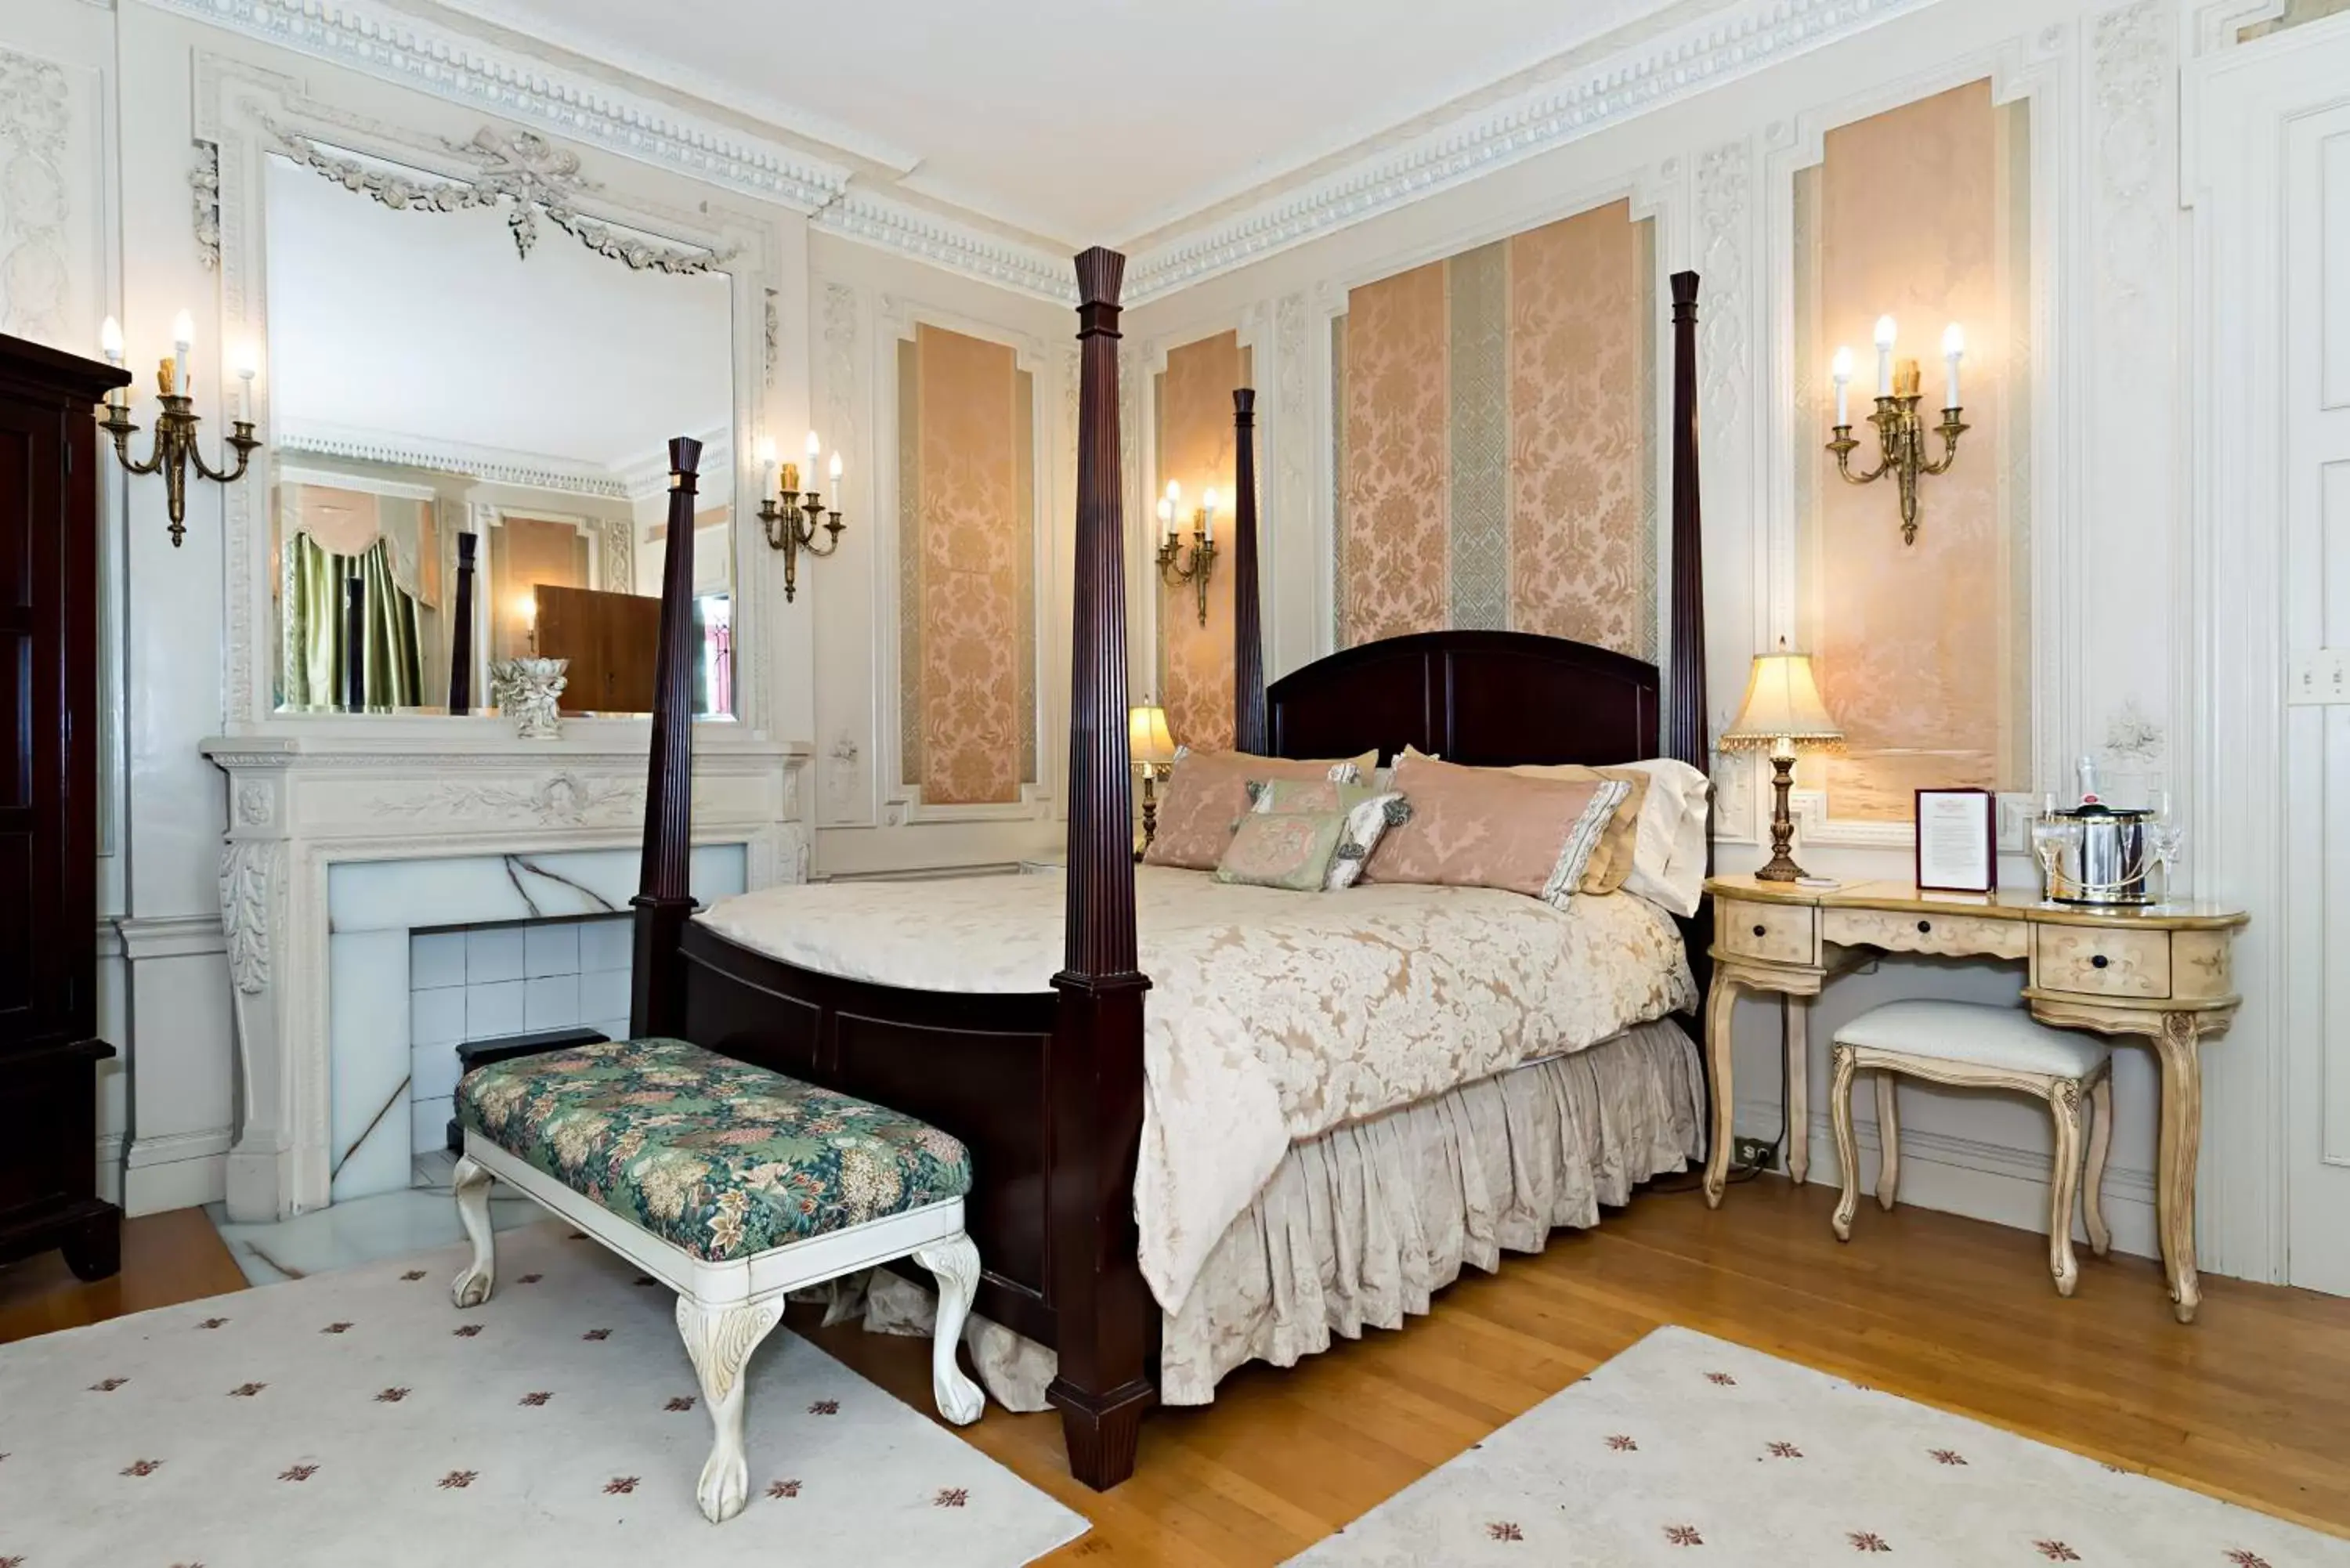 Bed, Room Photo in Silver Fountain Inn